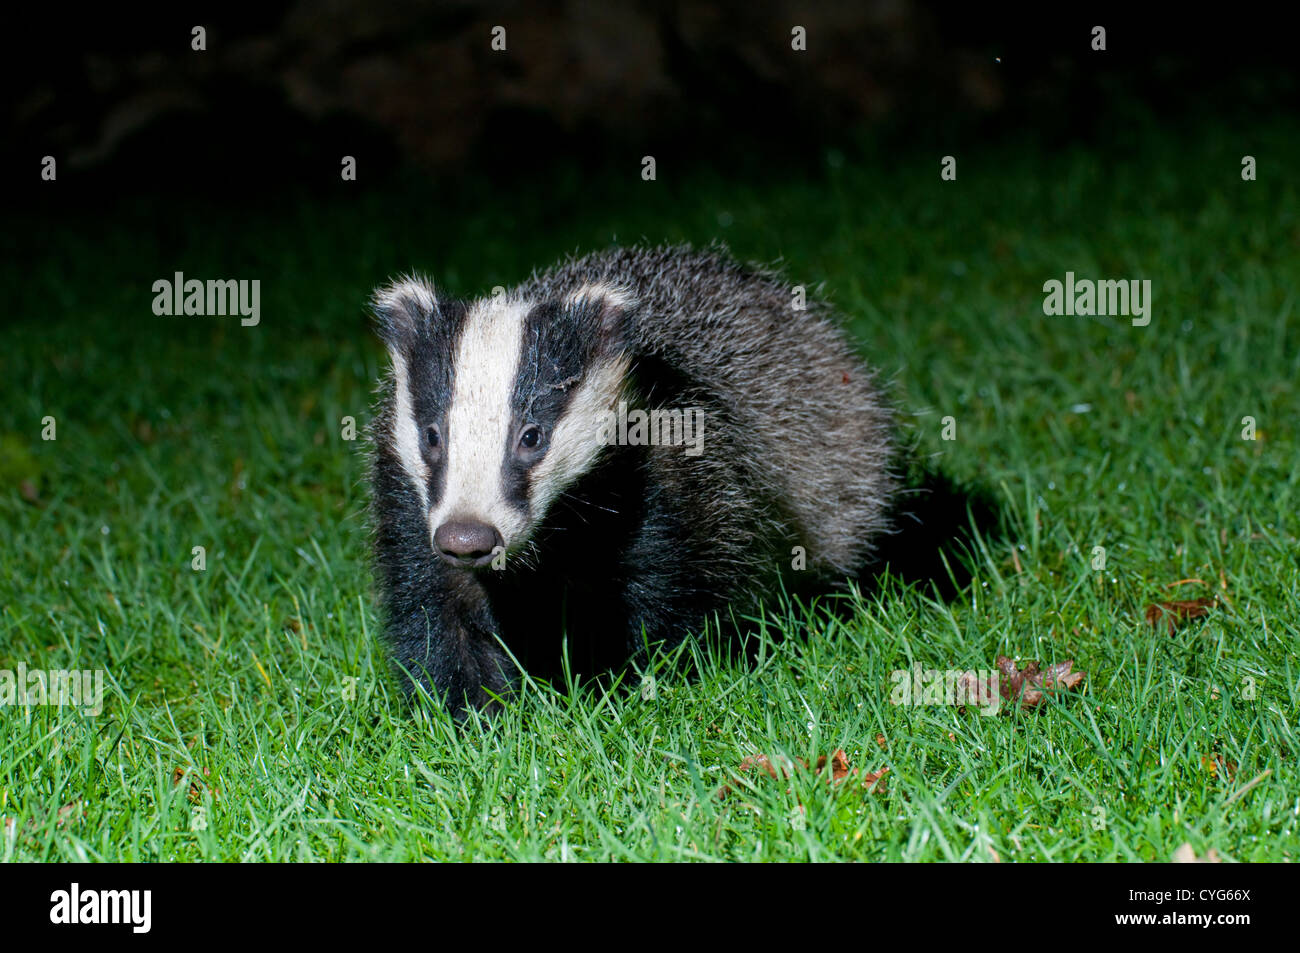 A eurasian badger (Meles meles) cub searches for food on a suburban garden lawn at night Stock Photo